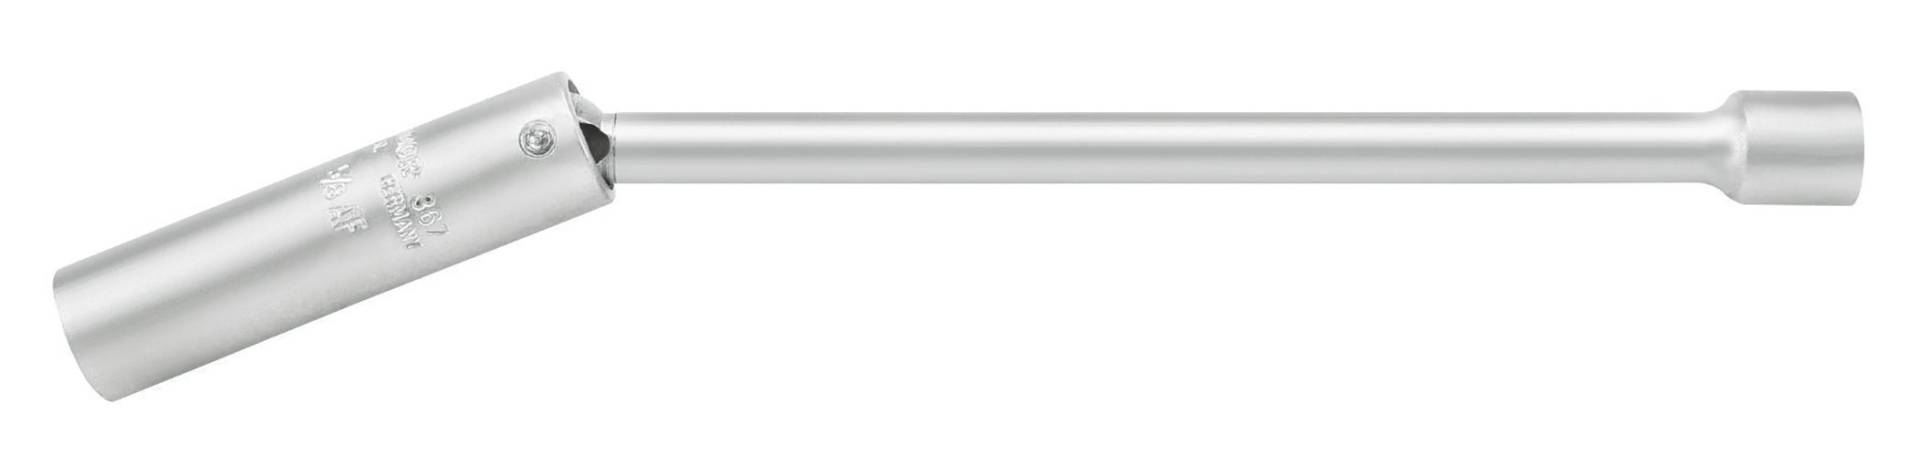 MATADOR Zündkerzenschlüssel, 10 (3/8) - 16 mm, 0367 0016 von MATADOR Schraubwerkzeuge